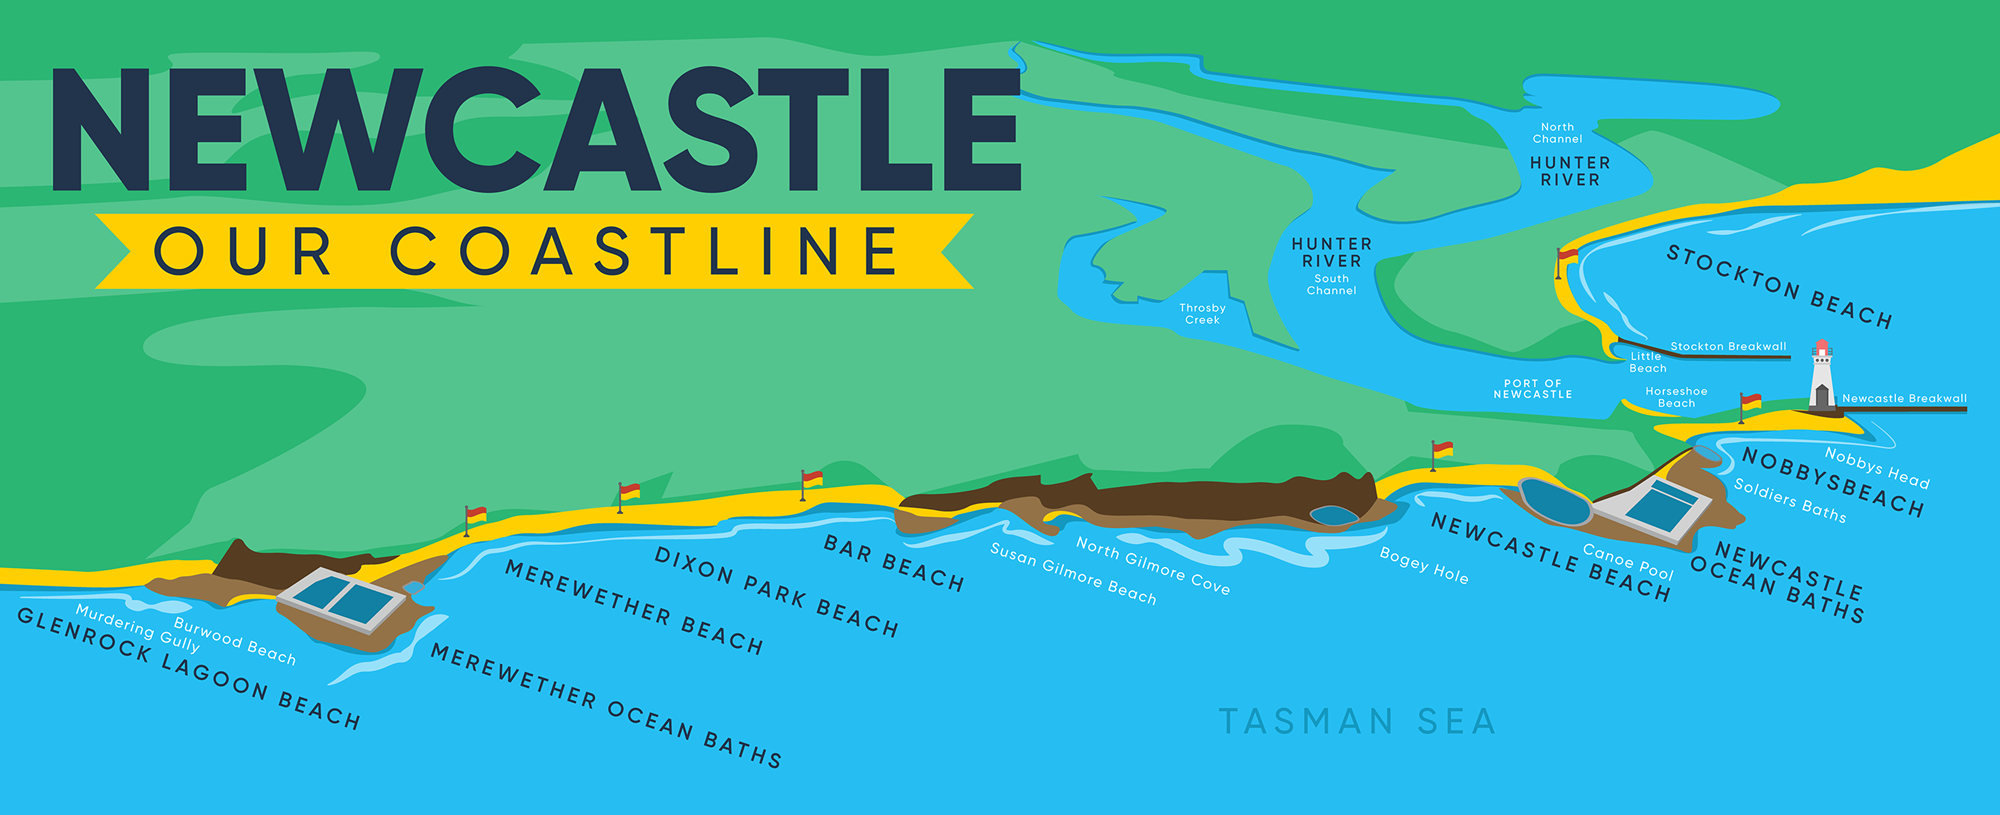 CN-Newcastle-Our-Coastline-2021.jpeg